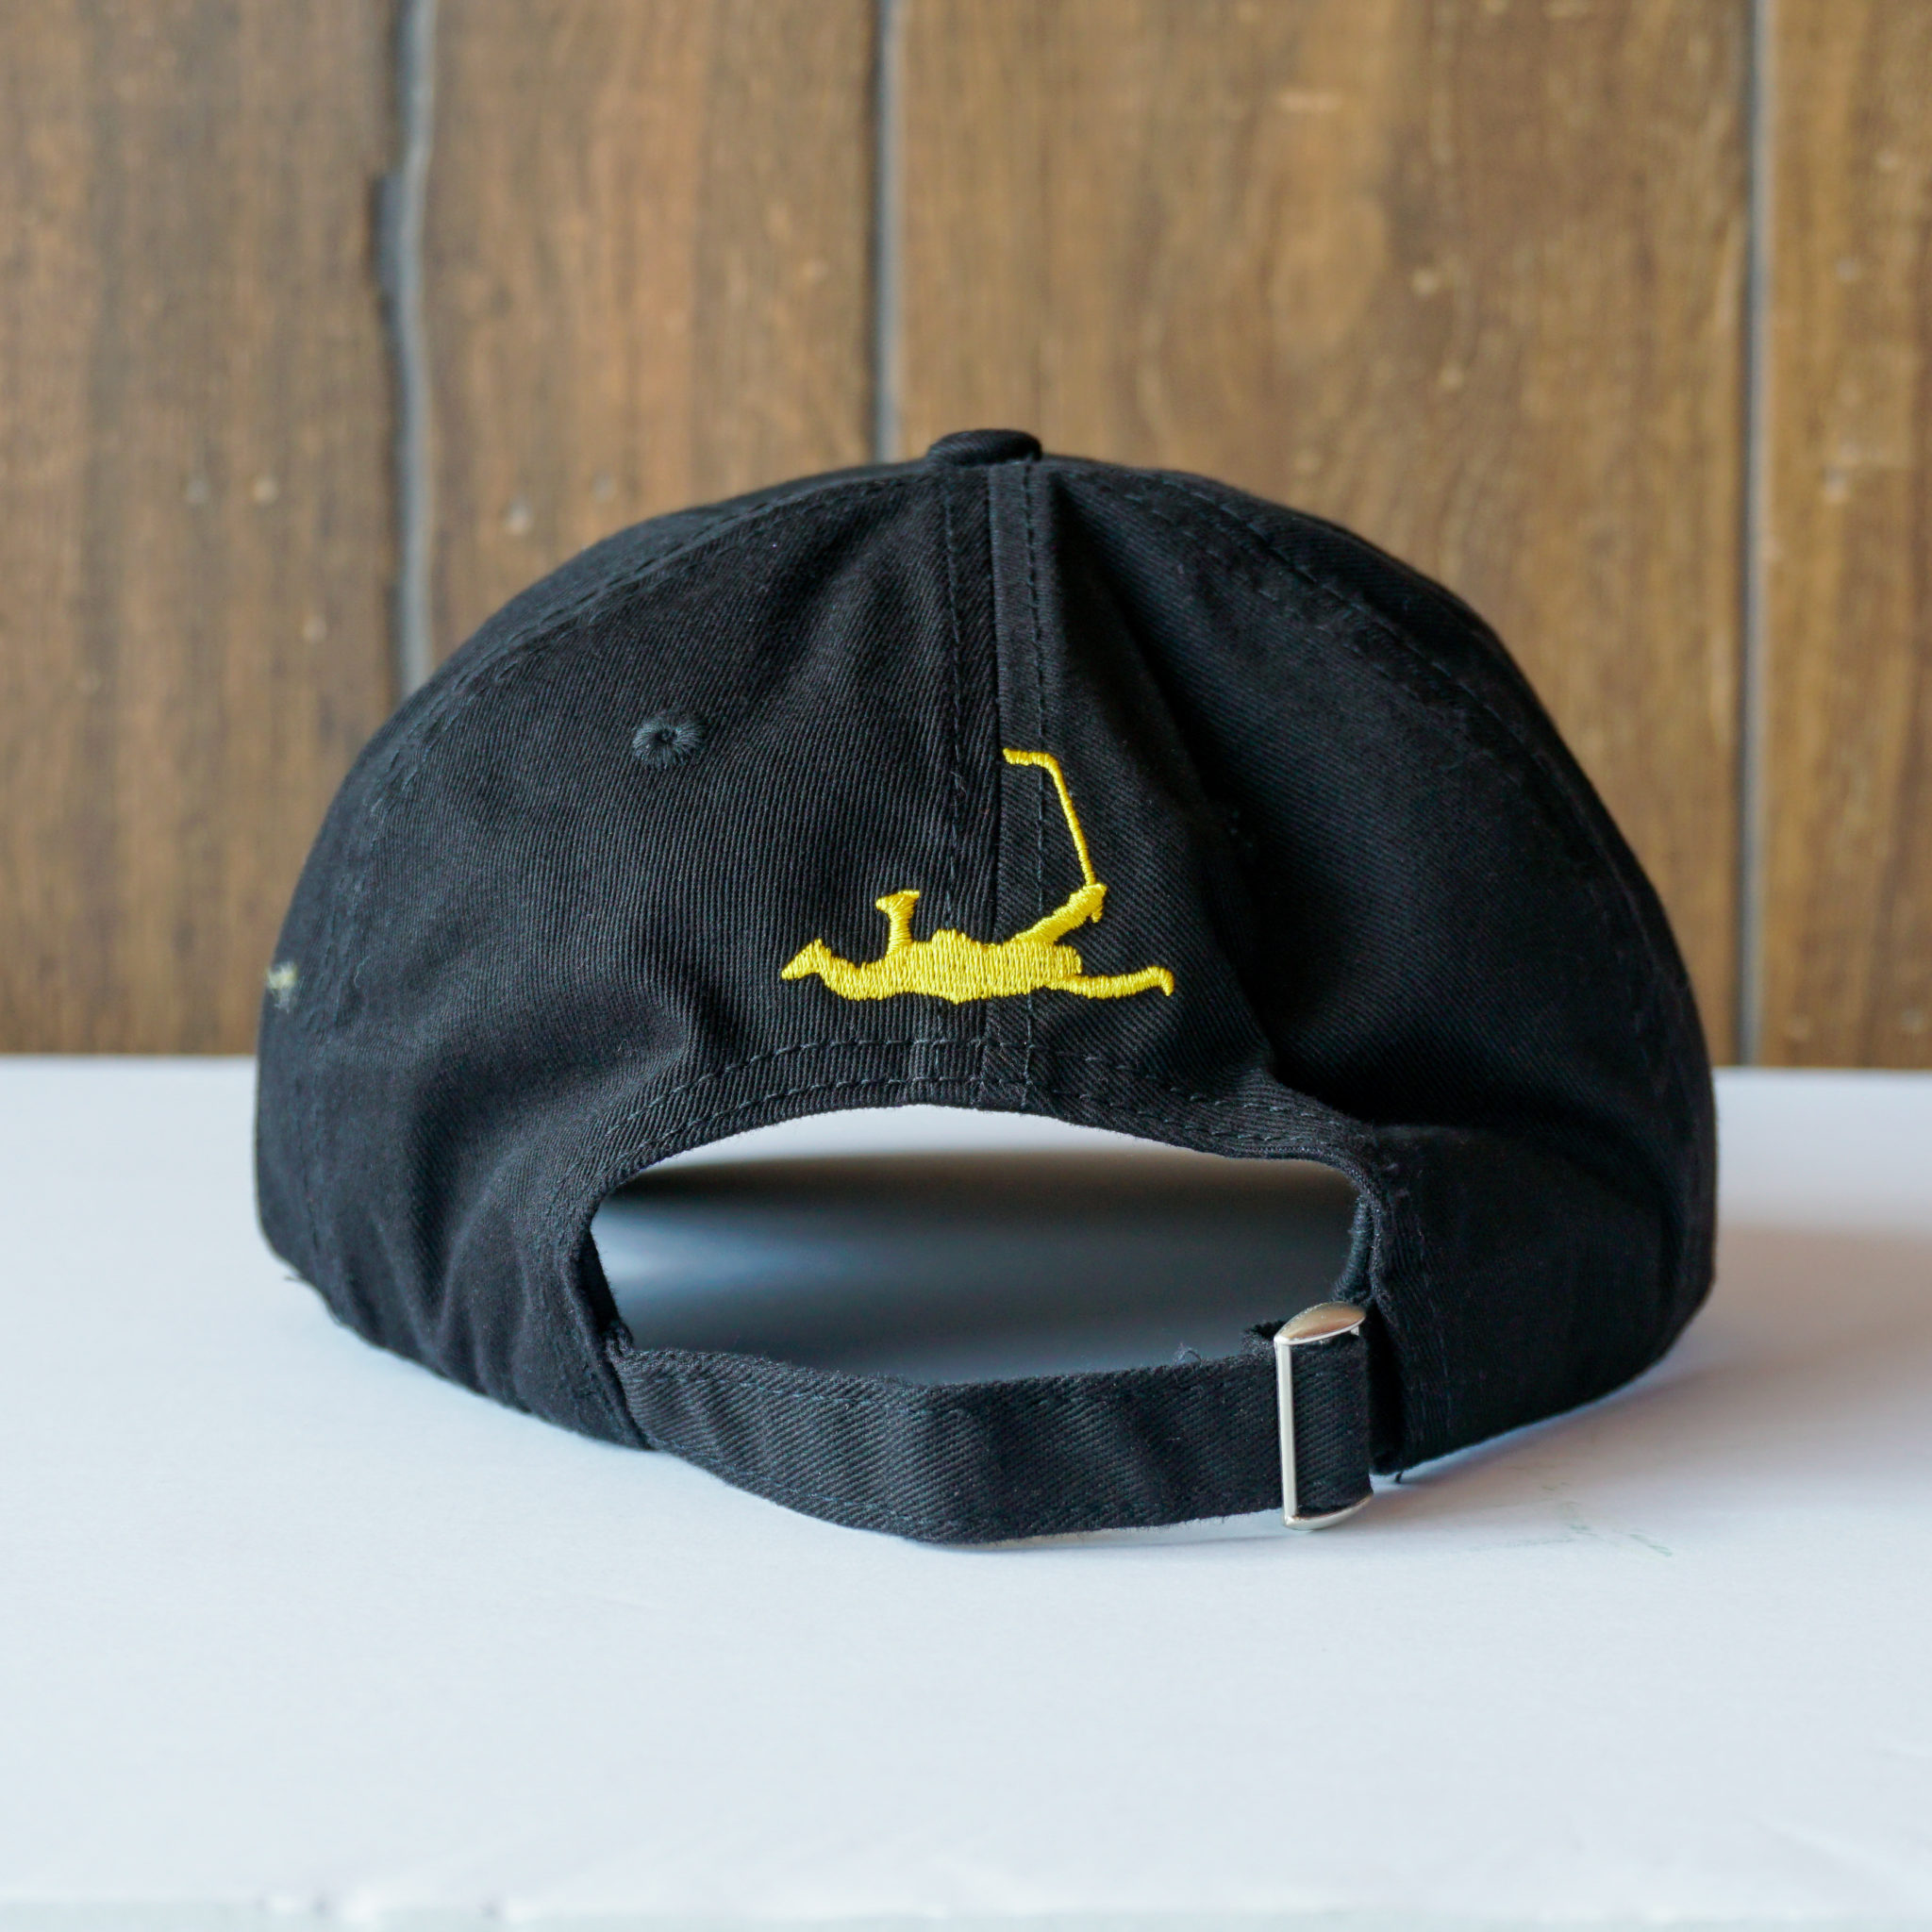 Bobby Orr Hall of Fame Hat